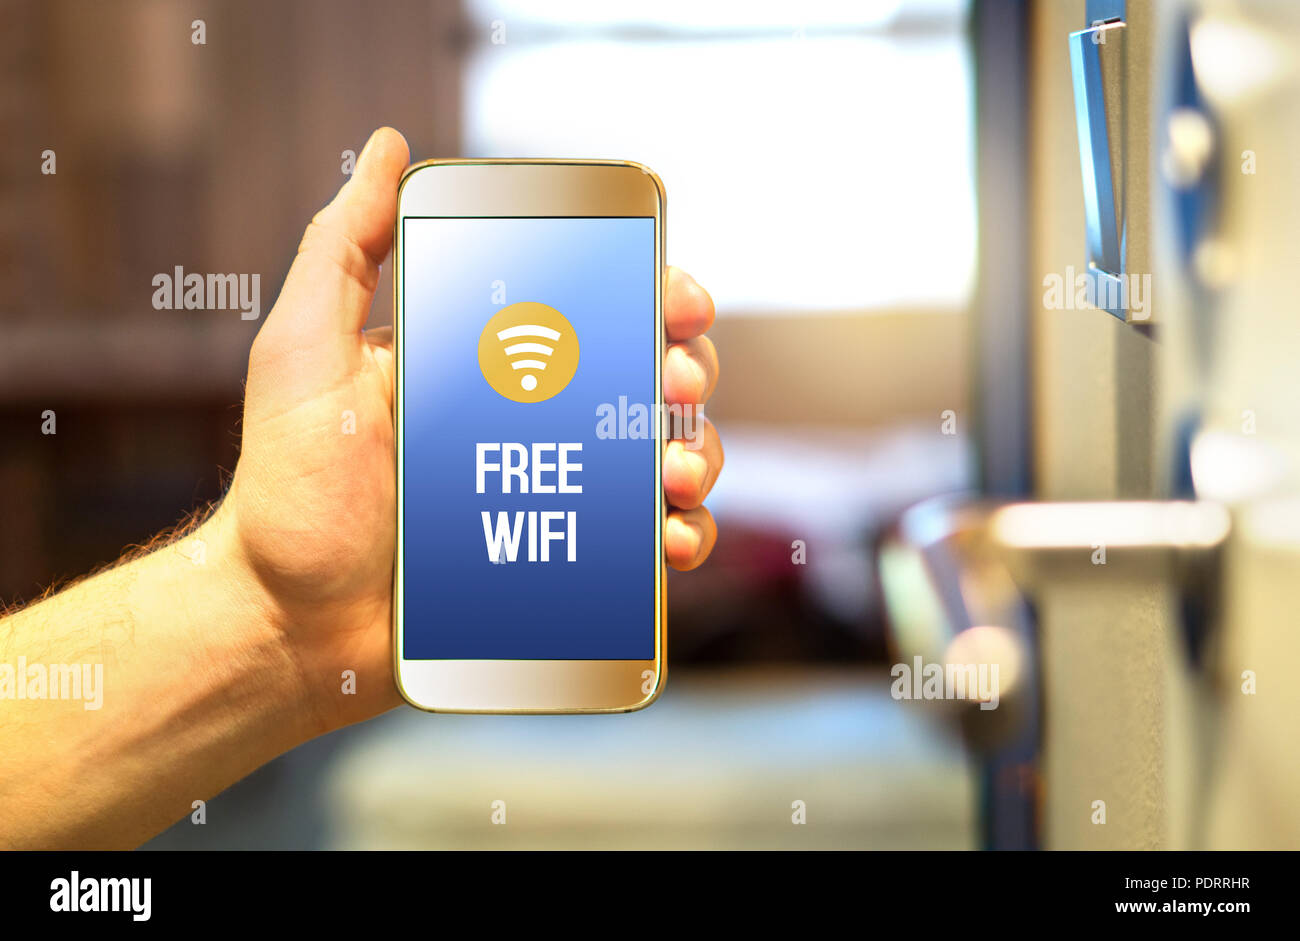 Wi-Fi disponible para clientes